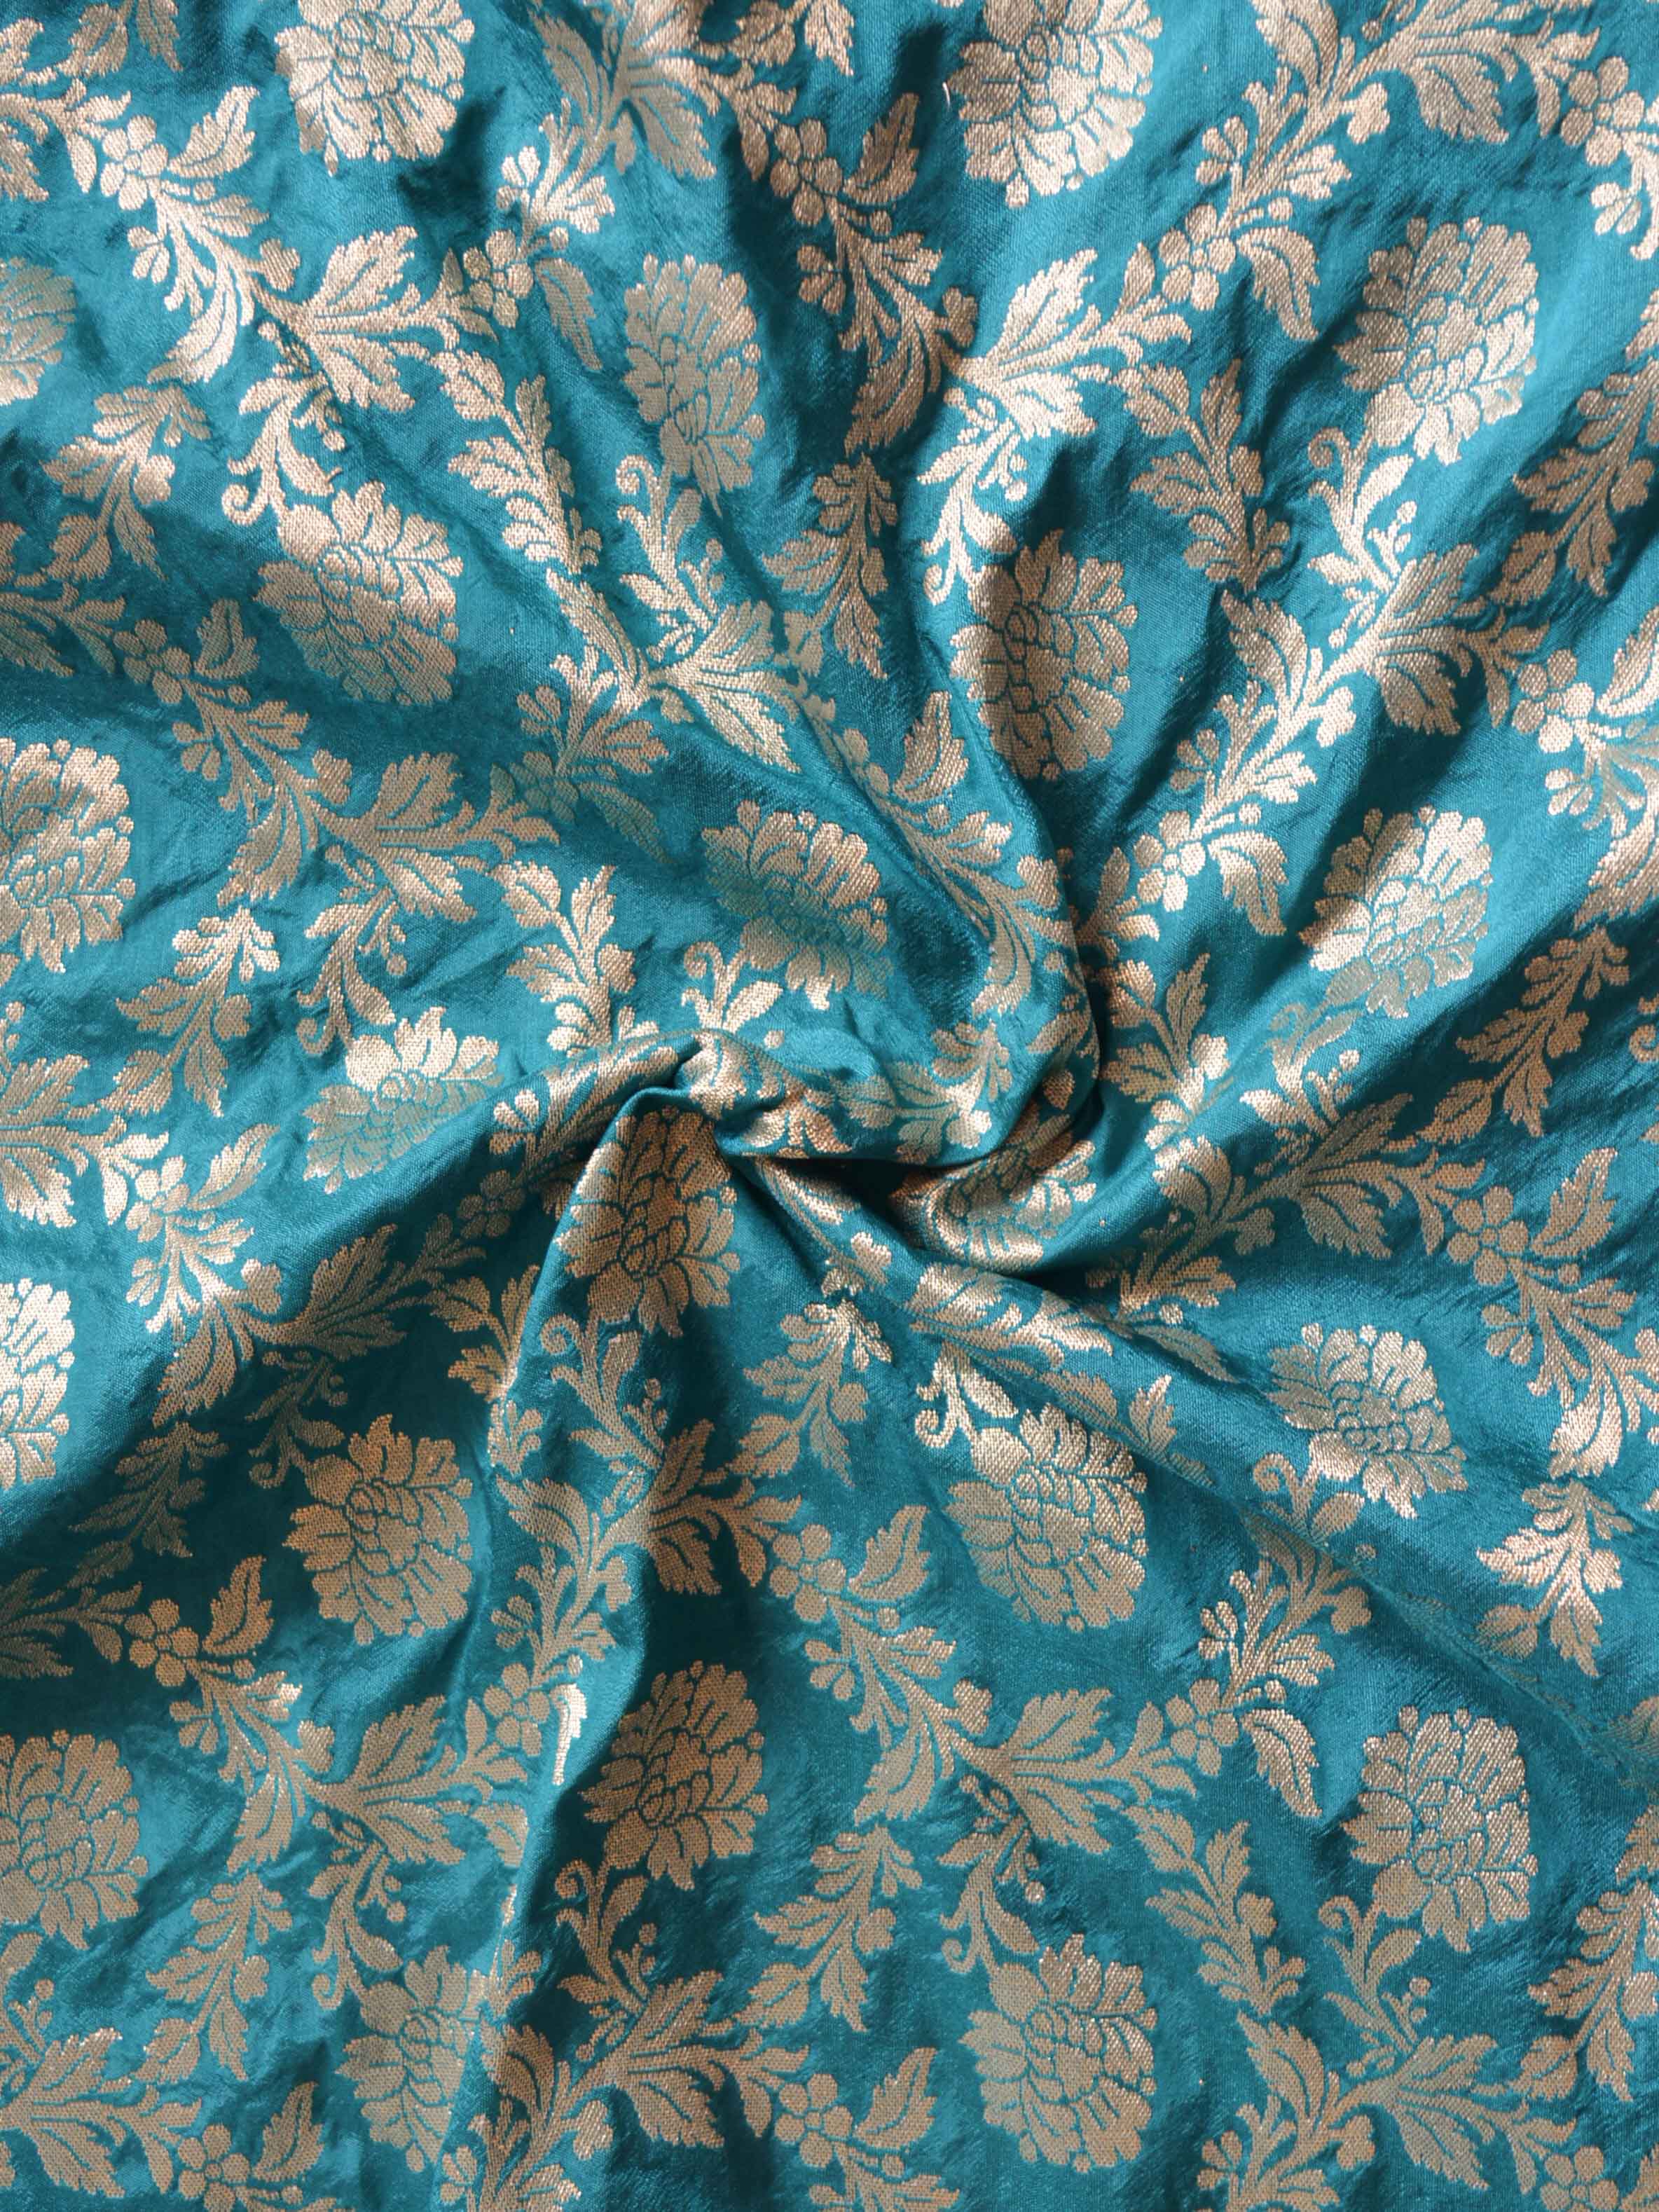 Banarasee Salwar Kameez Semi Silk Zari Jaal Work Fabric & Hot Pink Dupatta-Teal Green